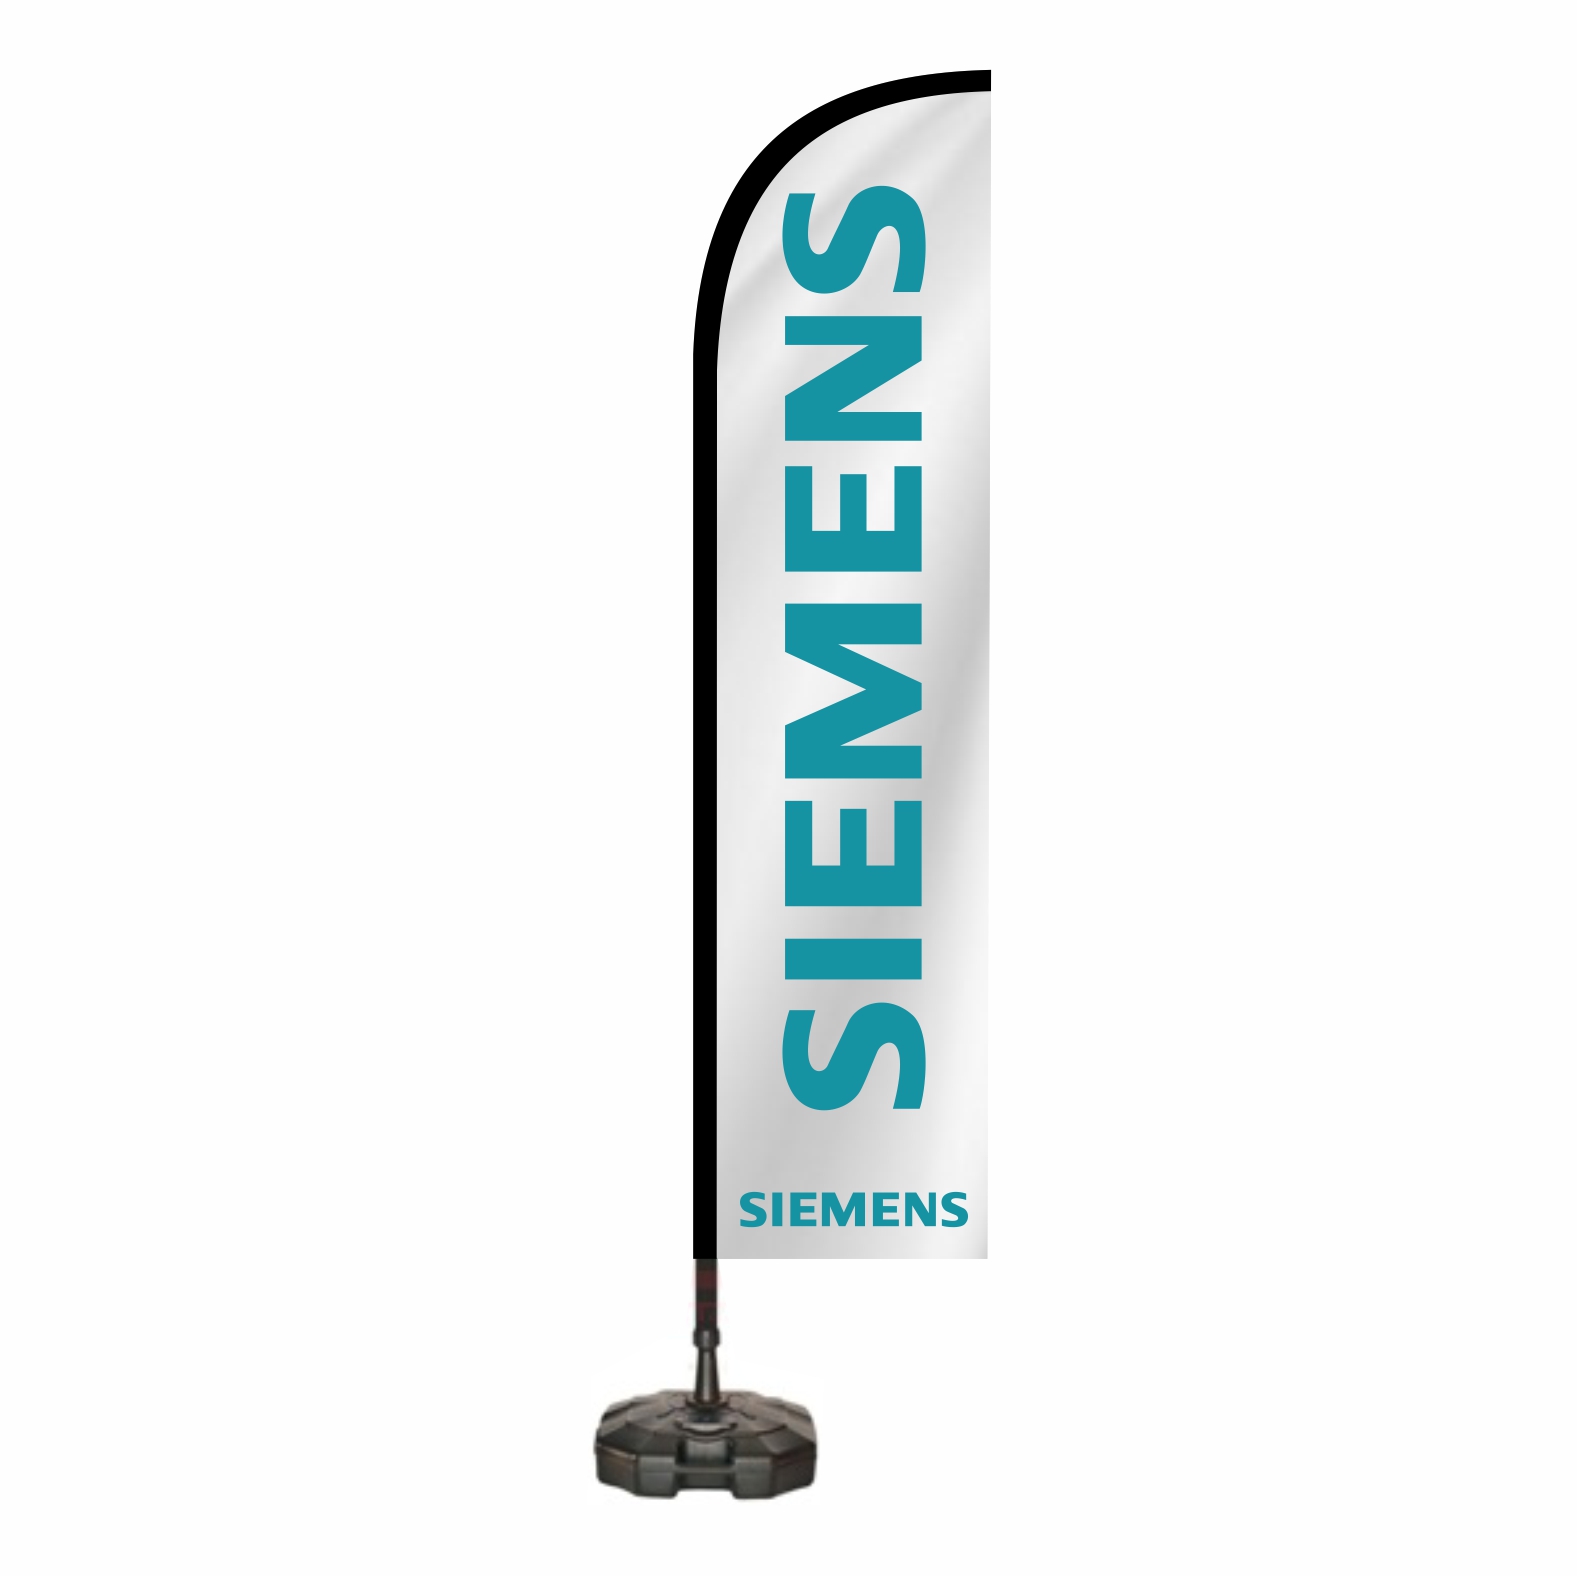 Siemens Oltal Bayra Ne Demektir